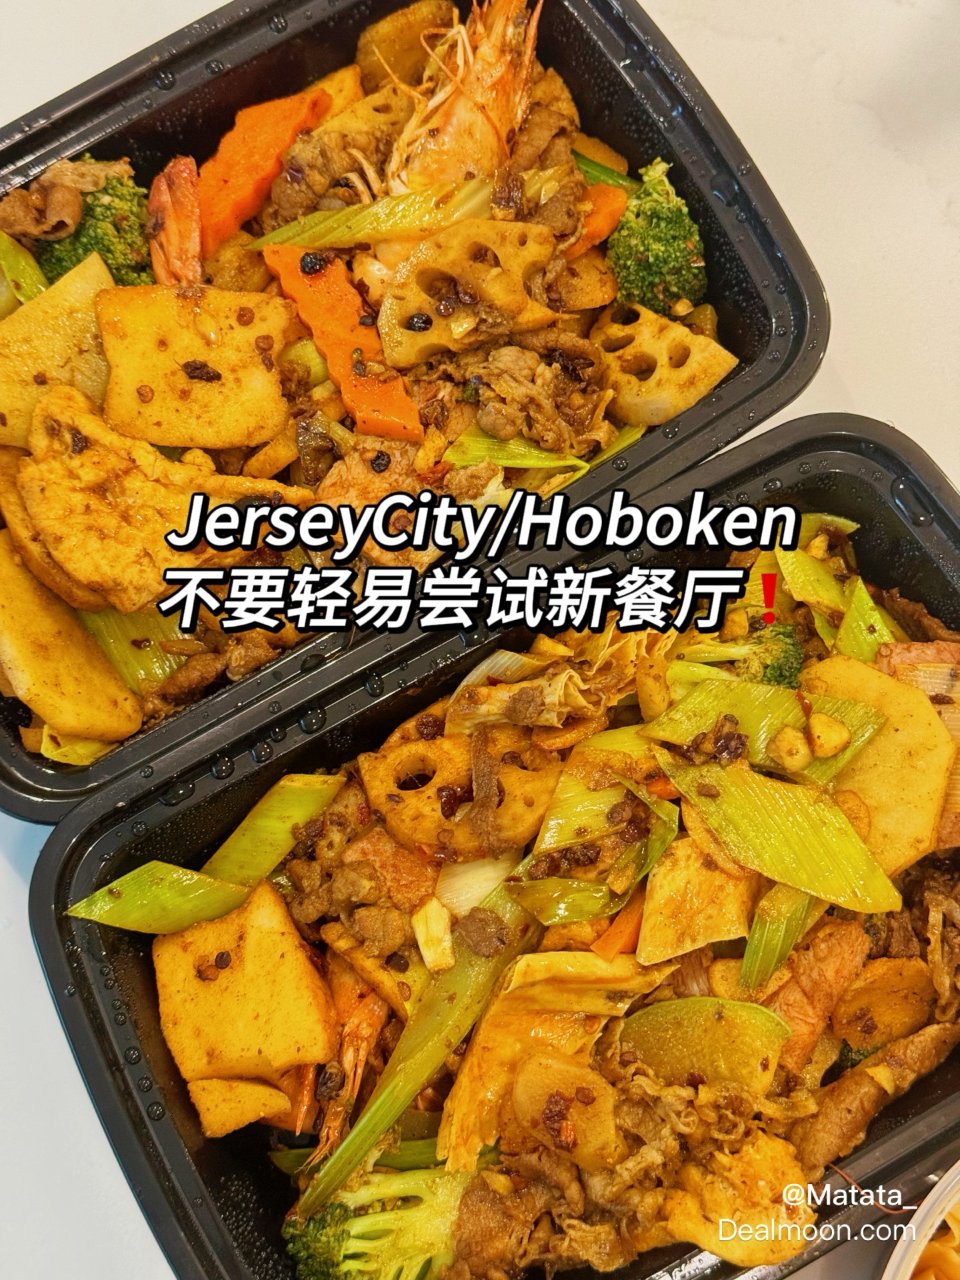 Jerseycity/Hoboken不要...